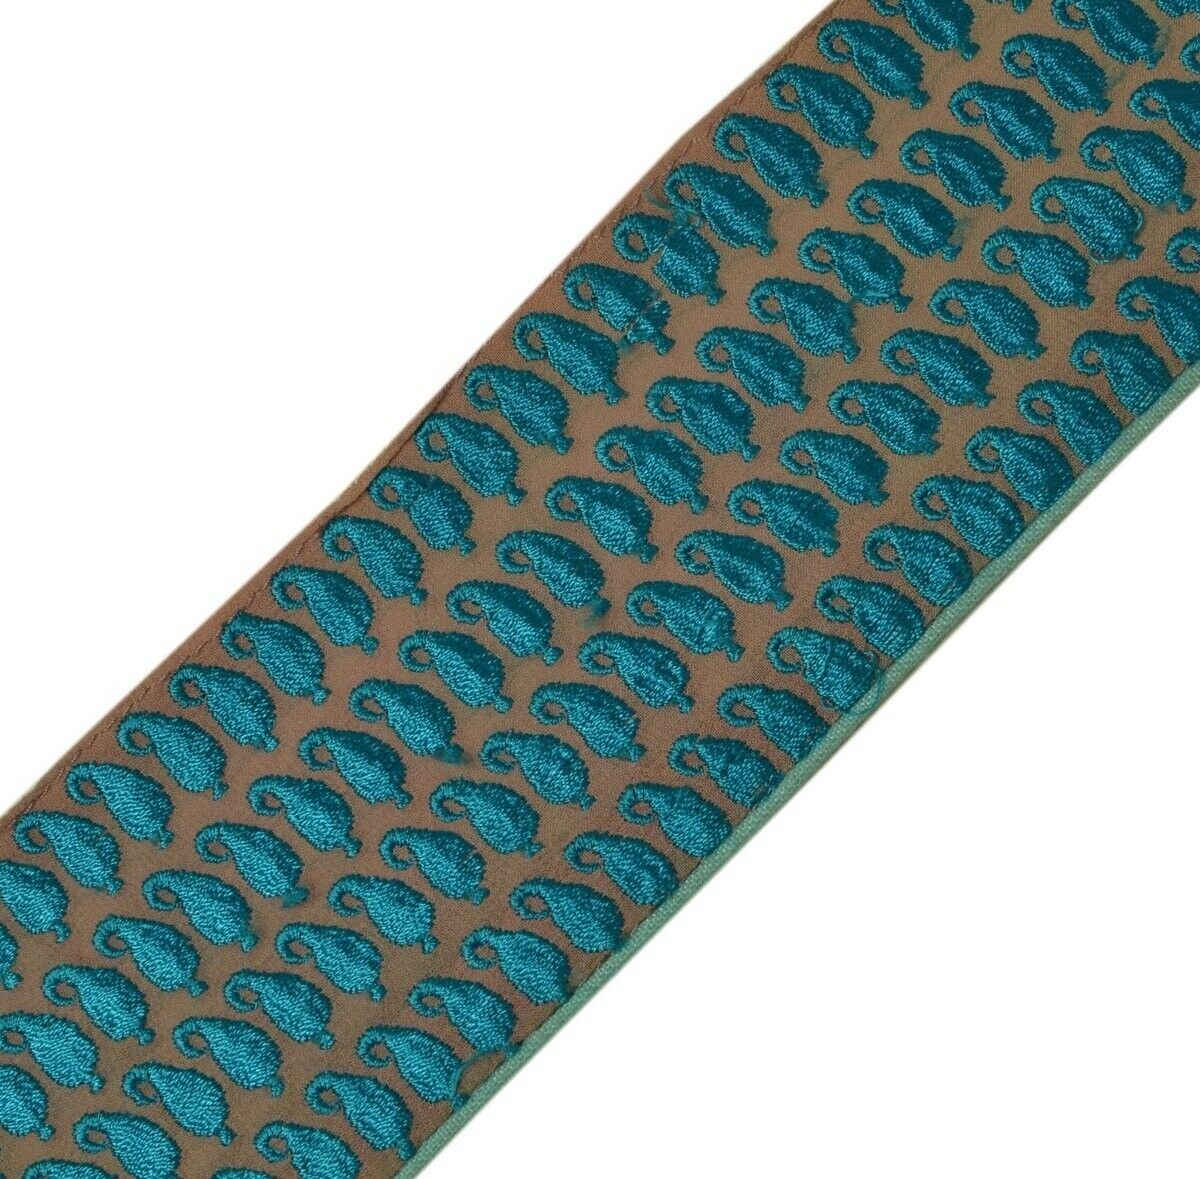 Vintage Sari Border Indian Craft Trim Paisley Embroidered Sewing Ribbon Lace